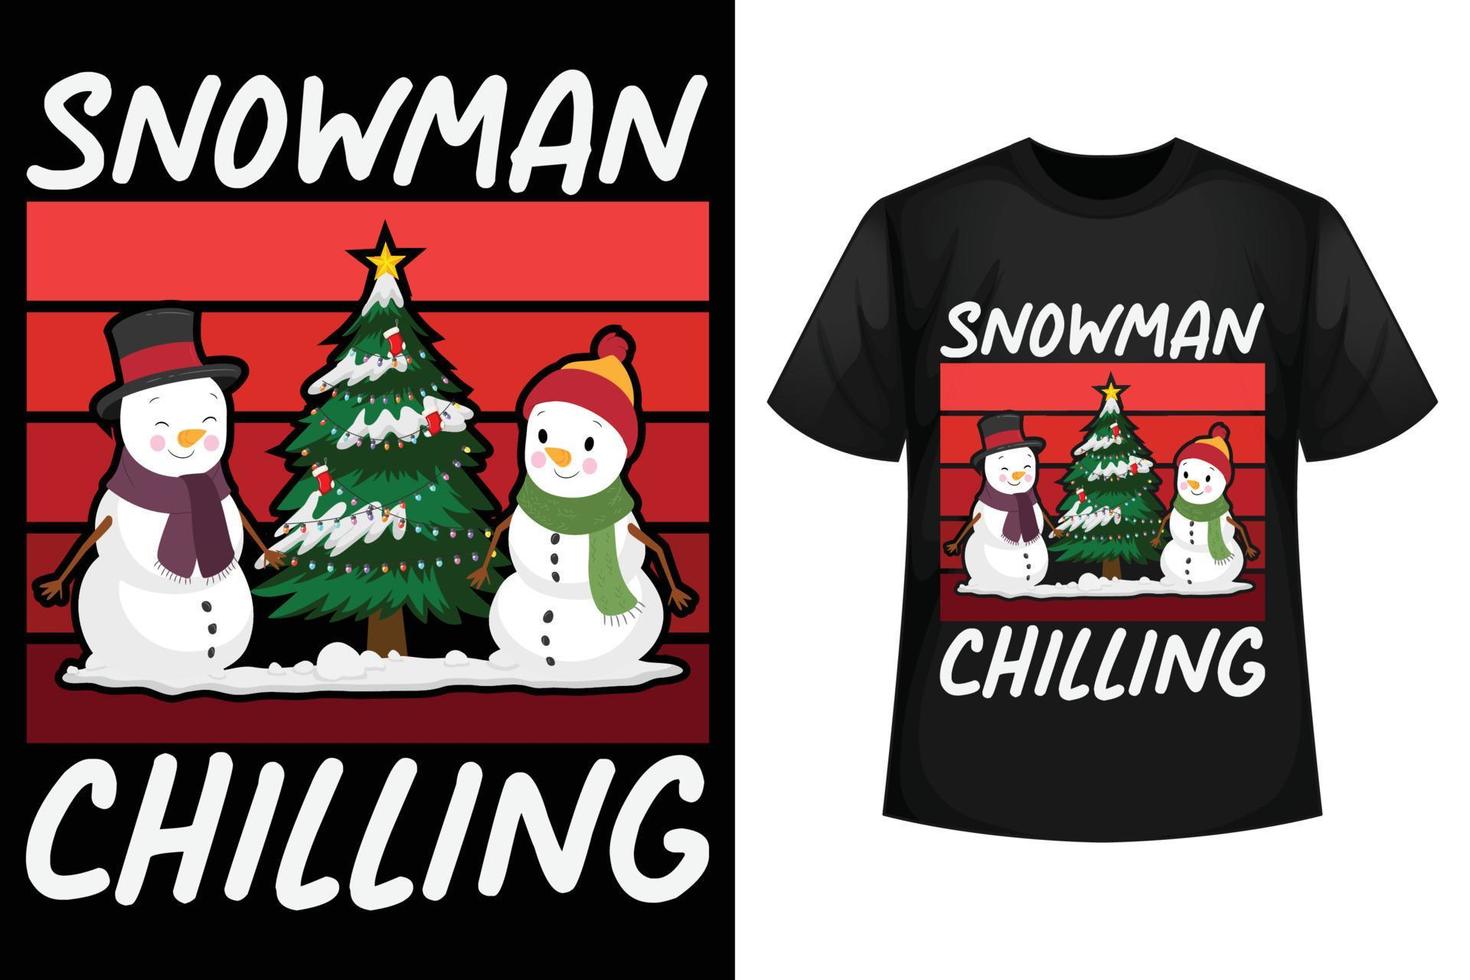 Snowman chilling - Christmas t-shirt design template vector